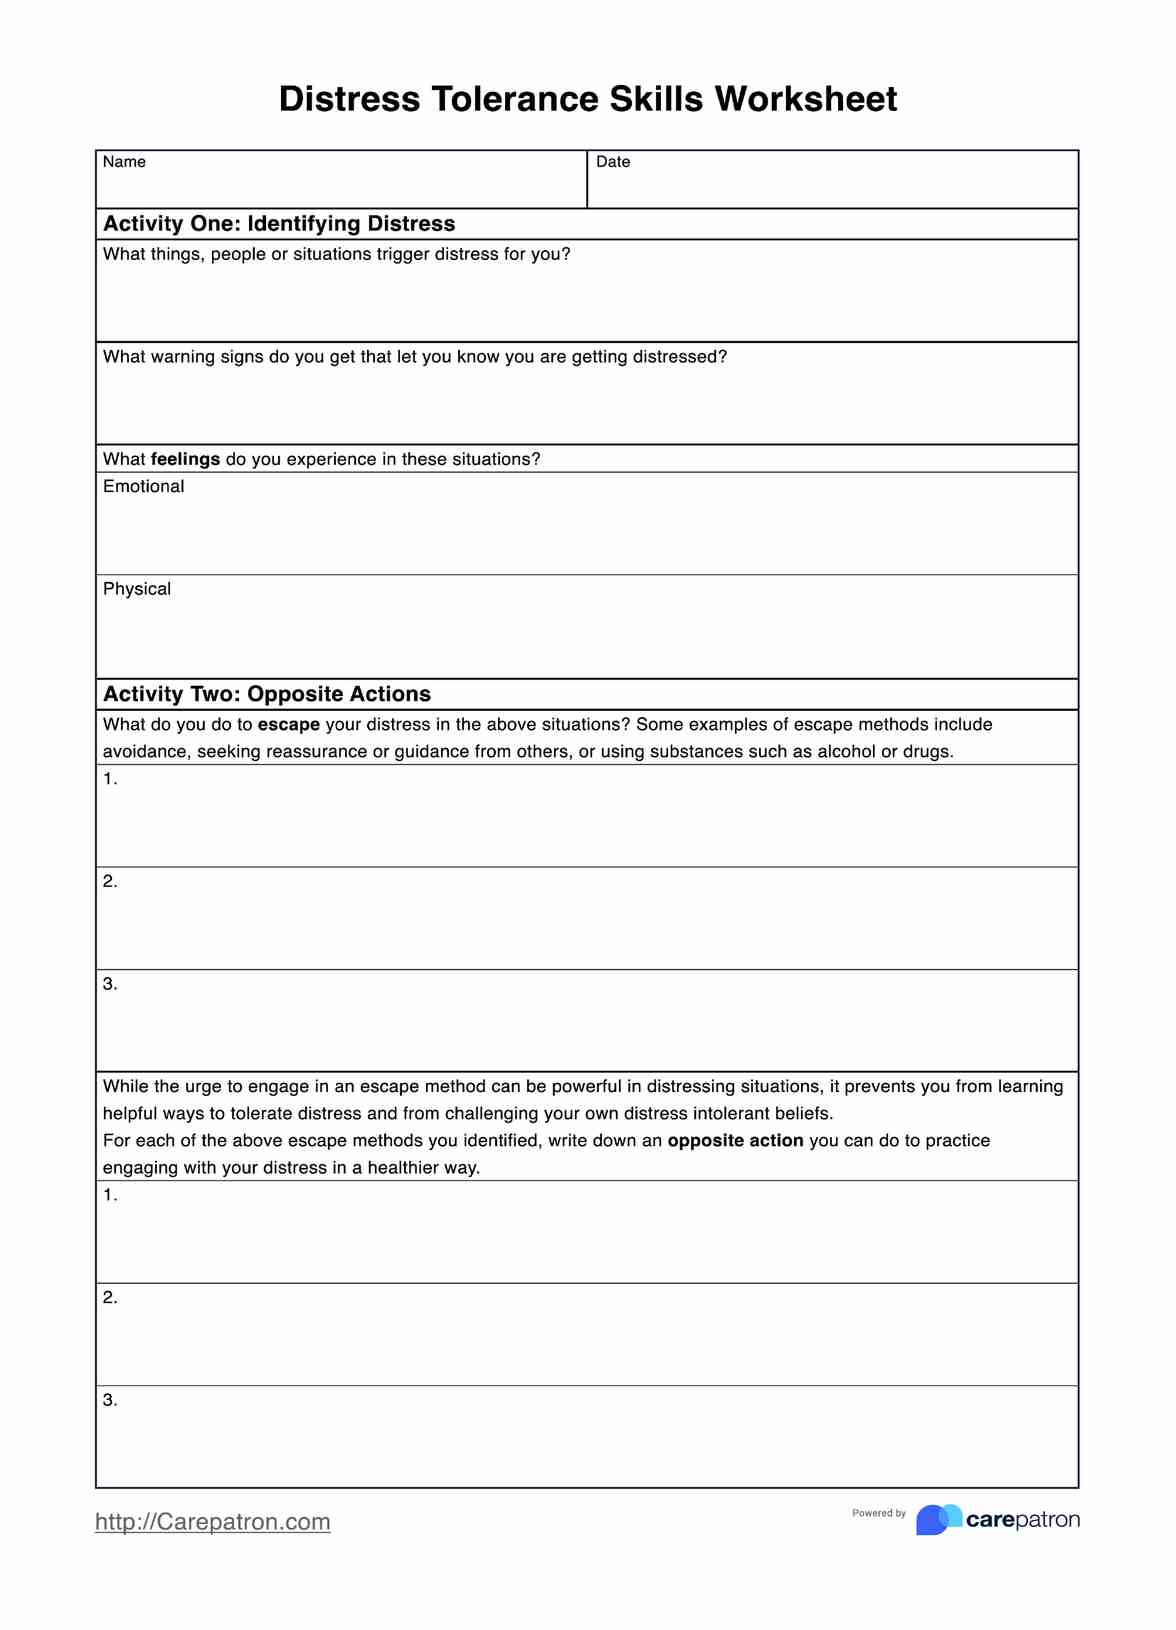 Distress Tolerance Skills Worksheets PDF Example